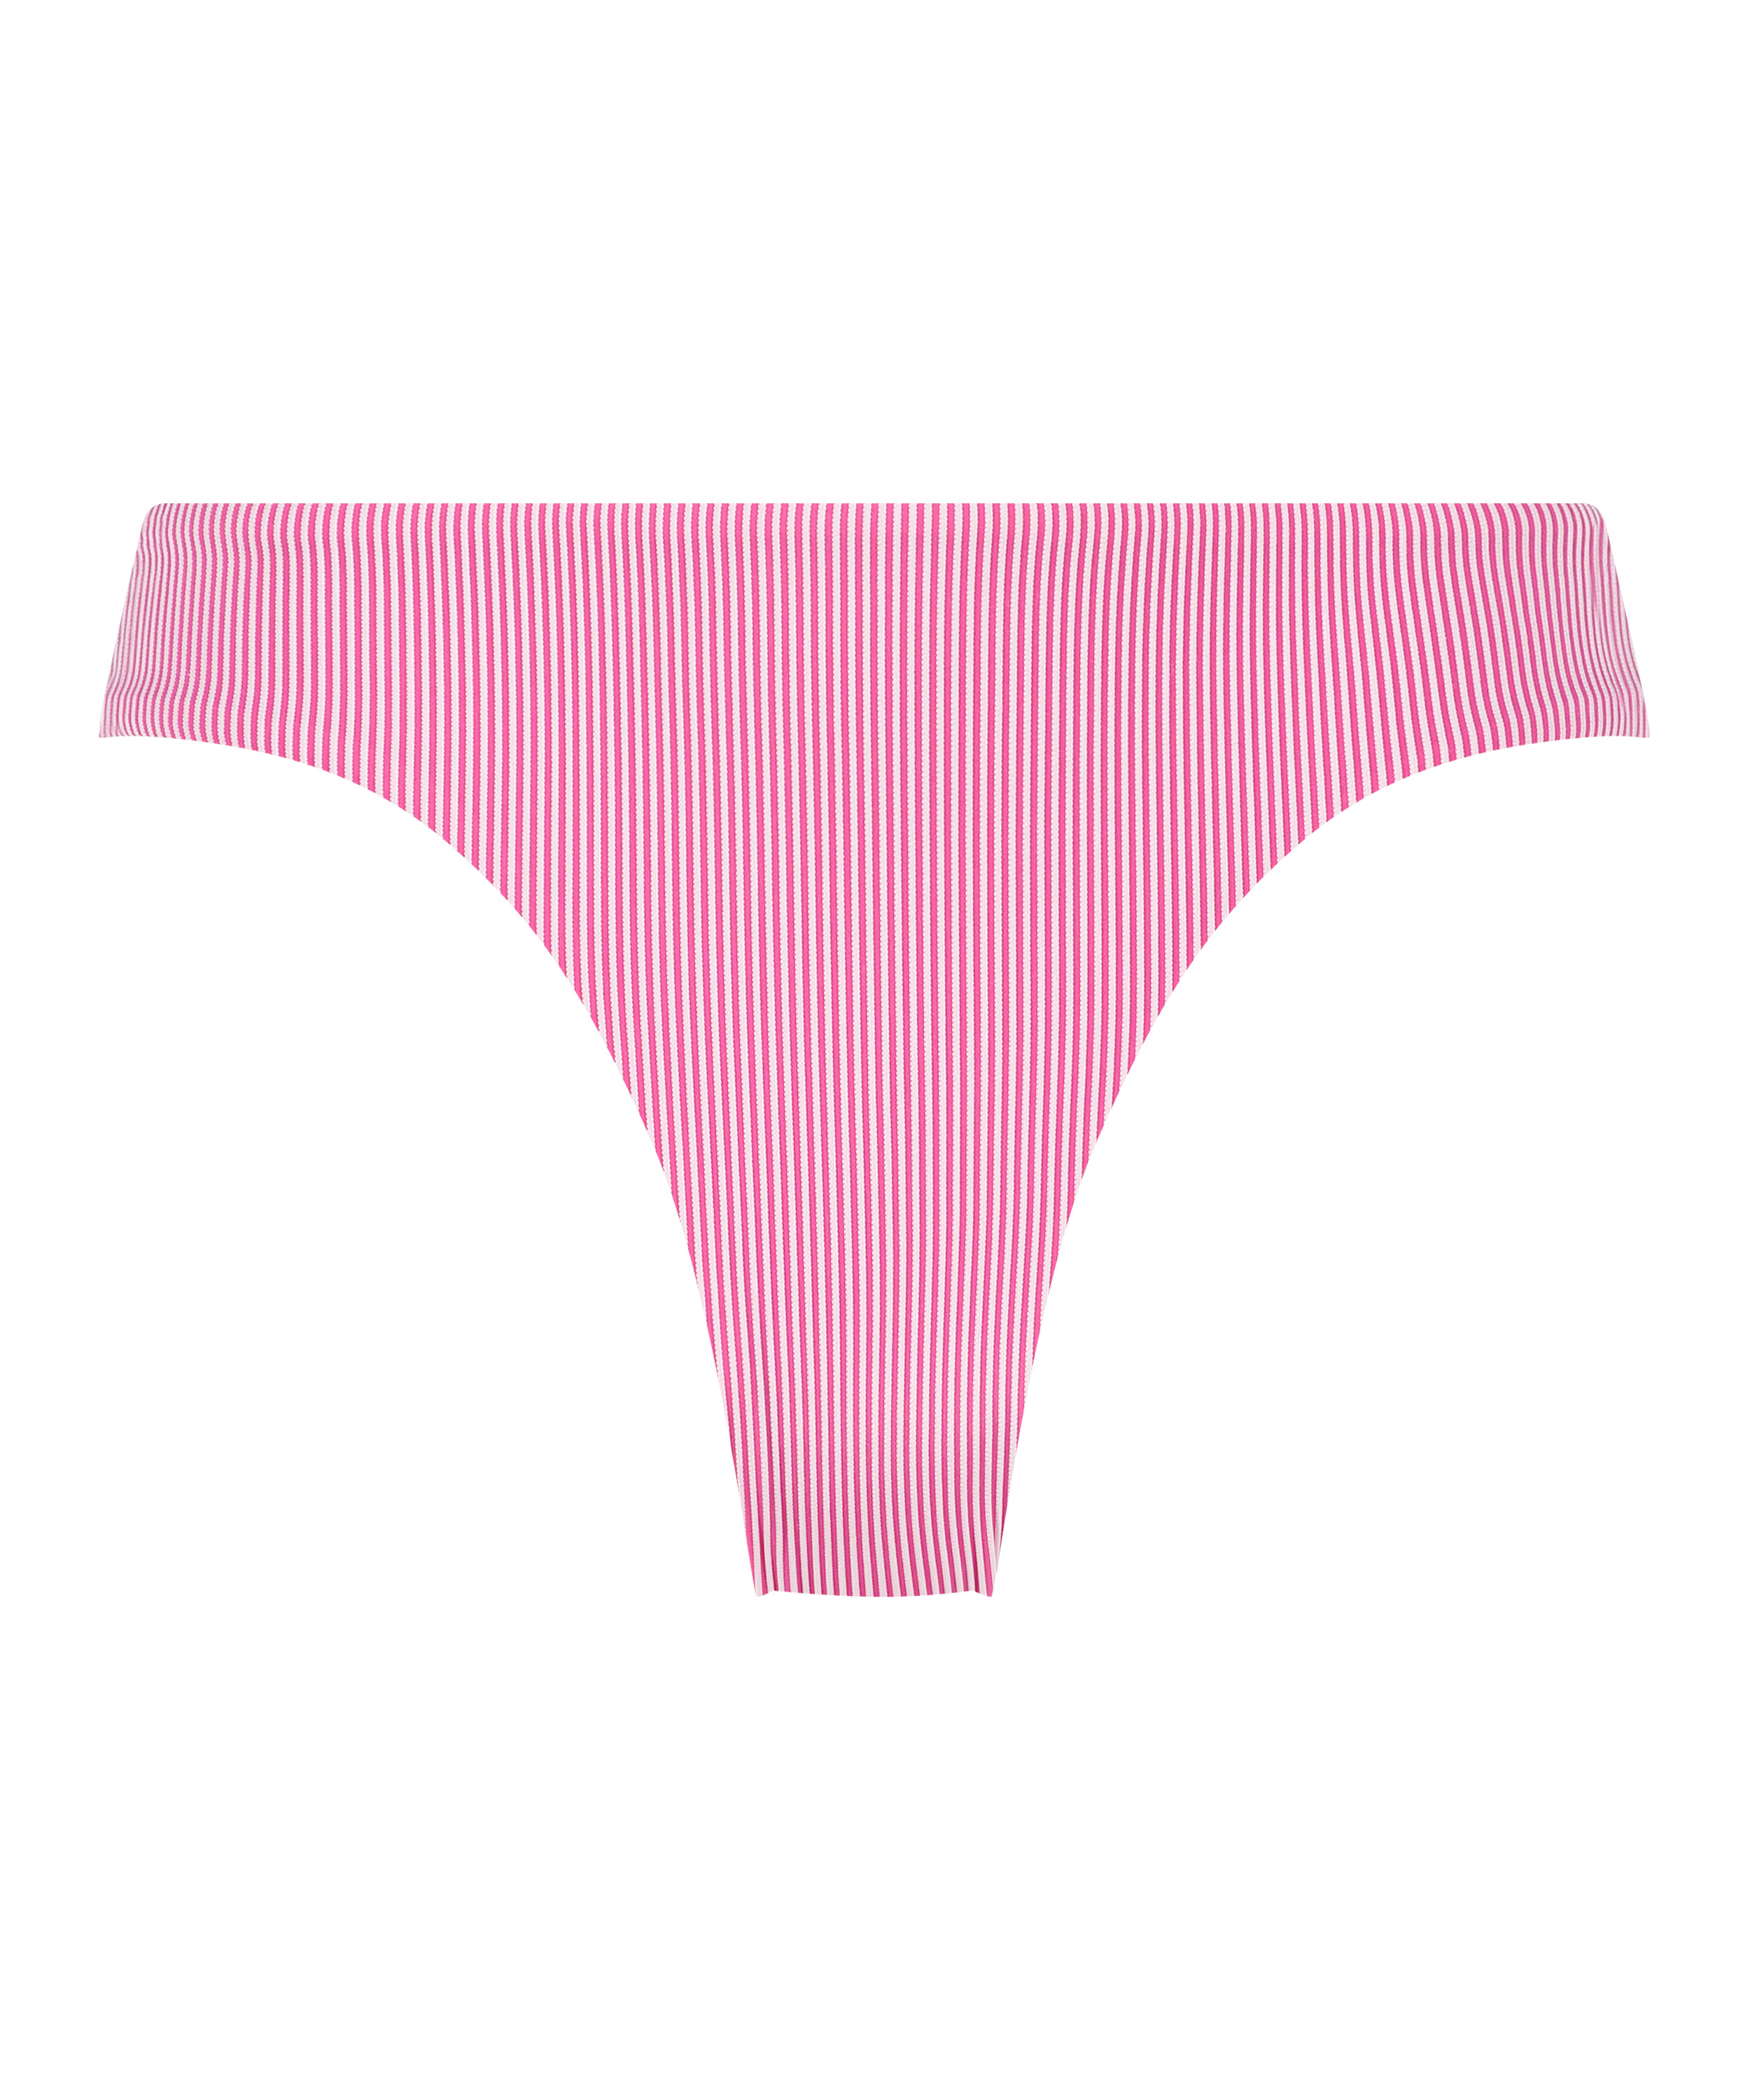 Fiji Rio Bikini Bottoms, Pink, main